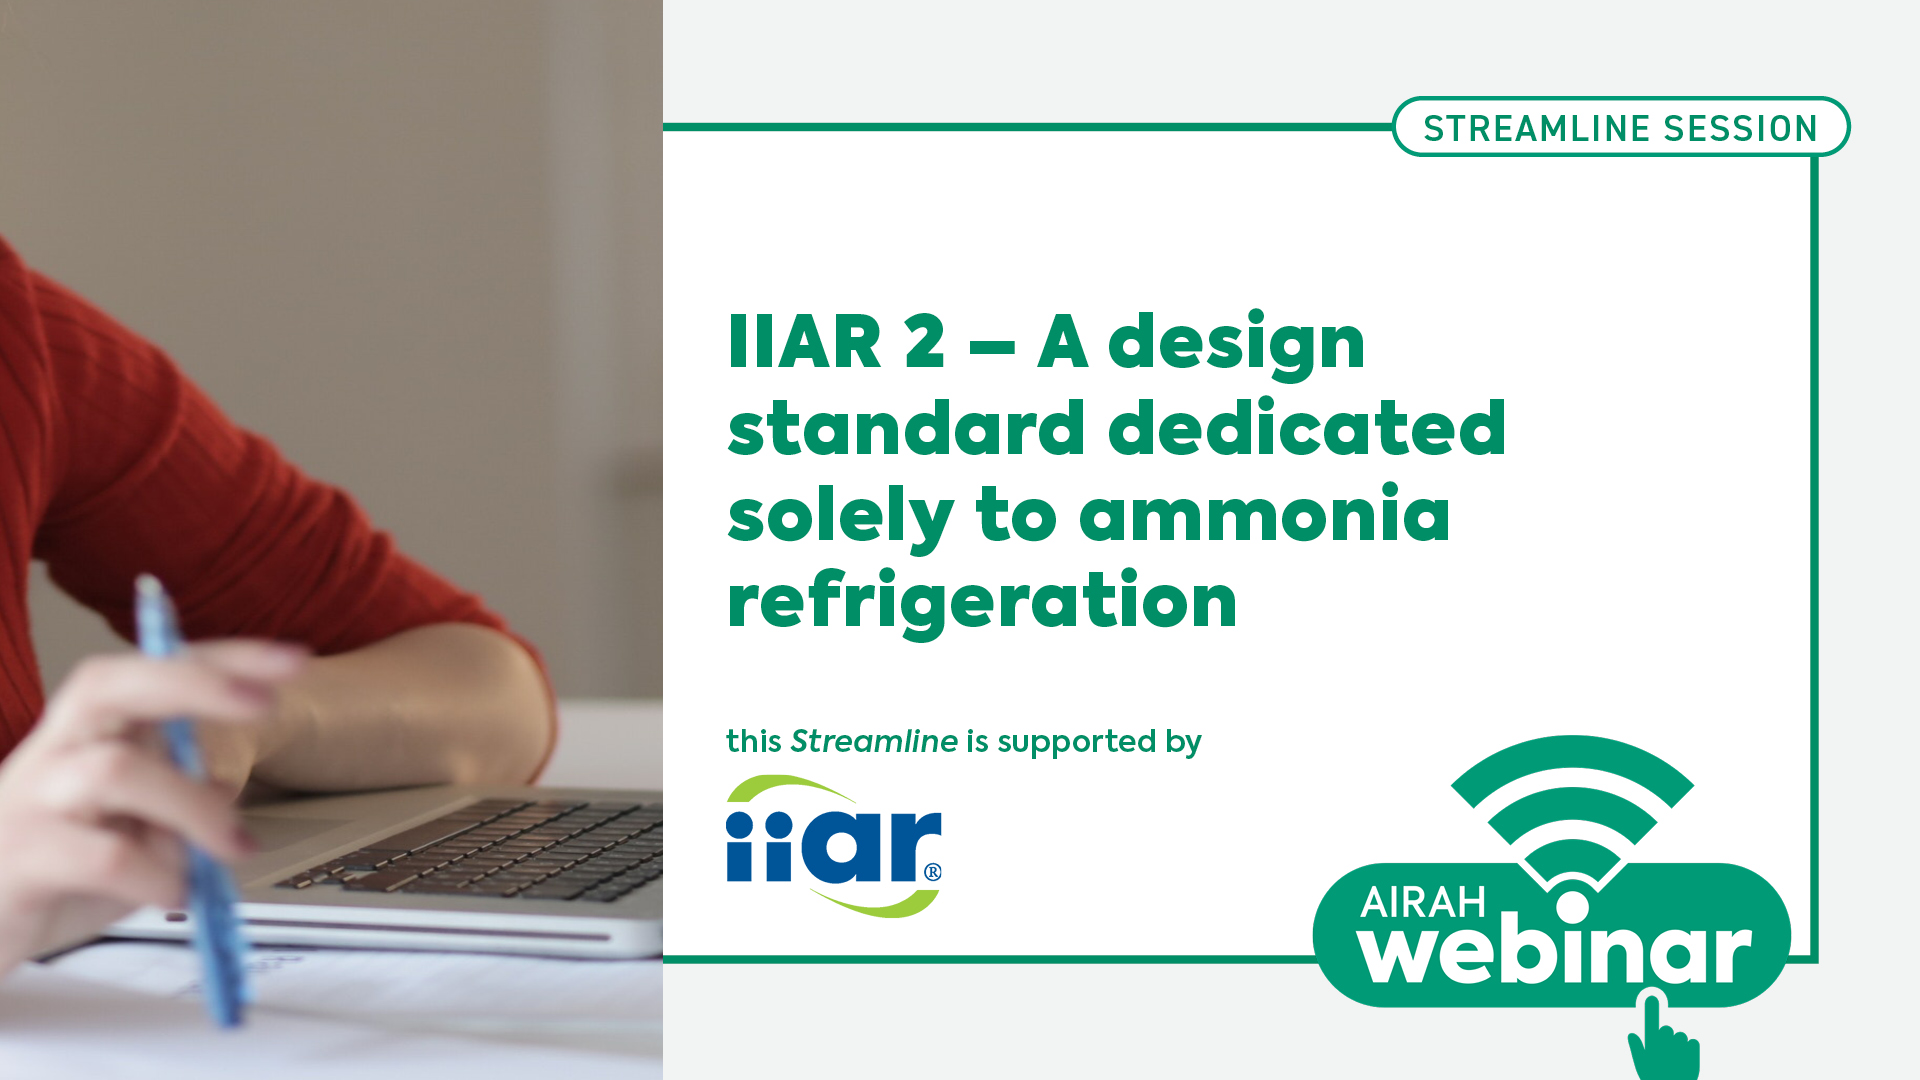 AIRAH Streamline – IIAR 2 – A Design Standard Dedicated Solely to Ammonia Refrigeration